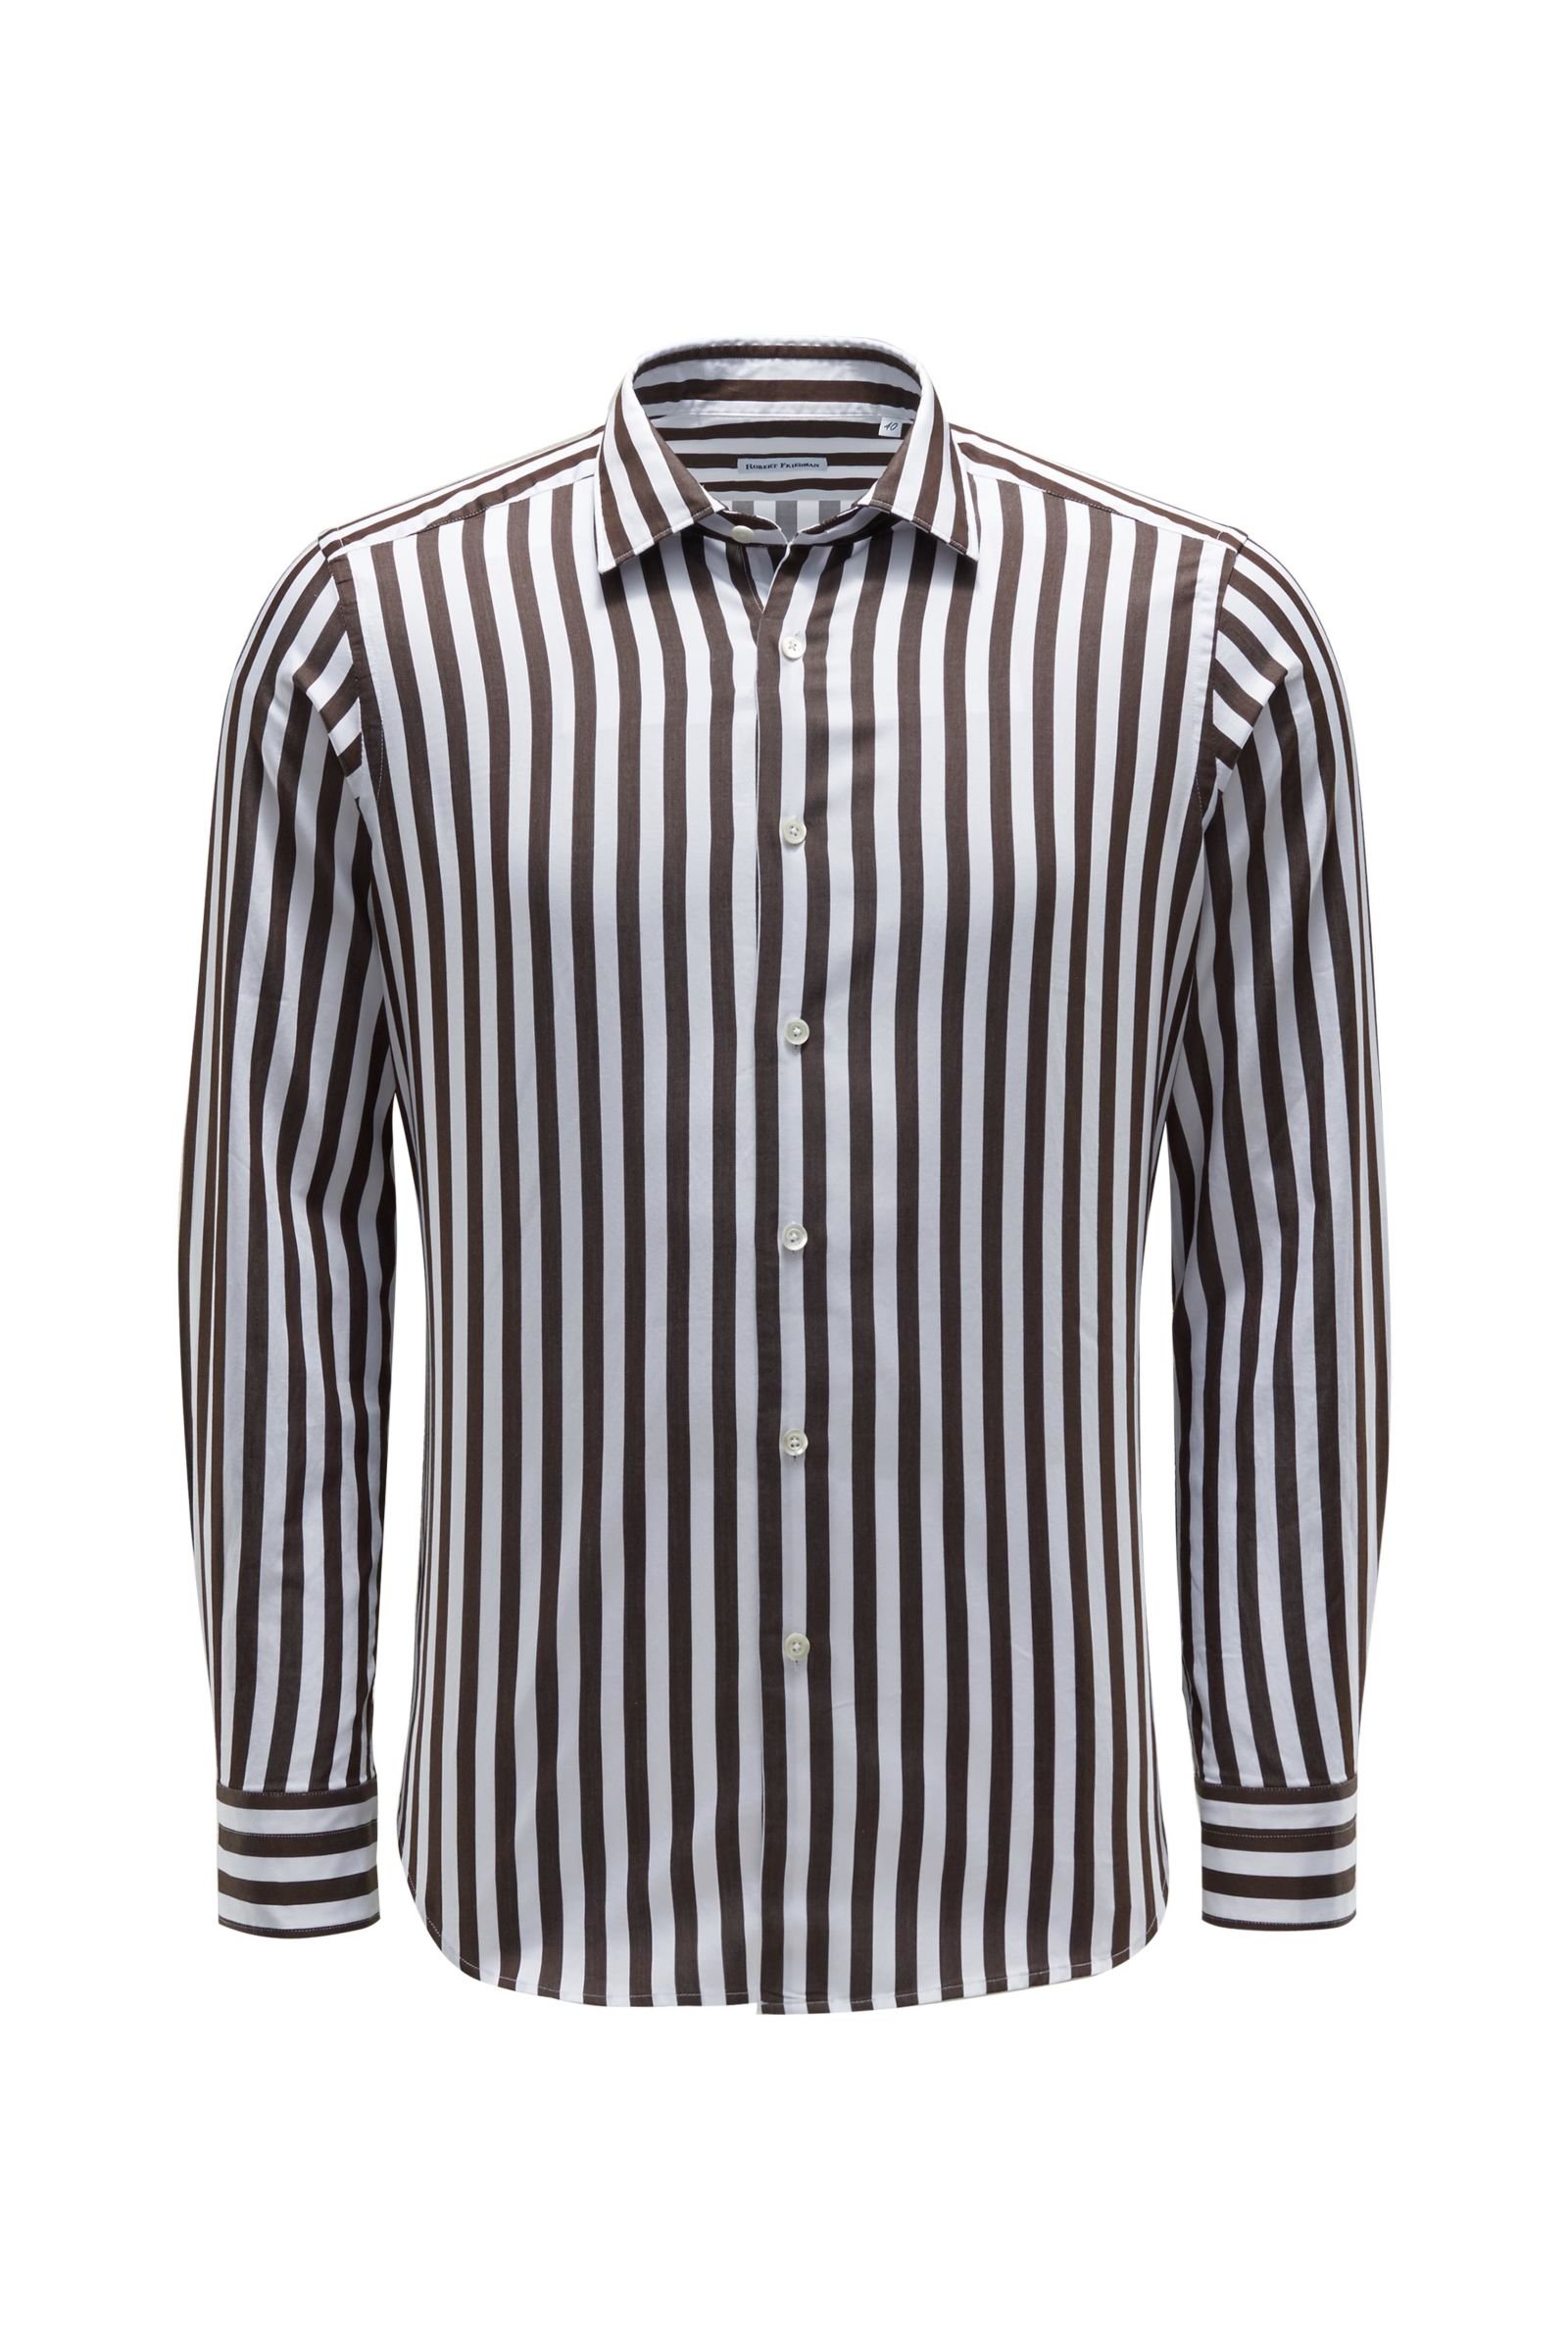 Casual shirt 'Leo' slim collar dark brown/white striped